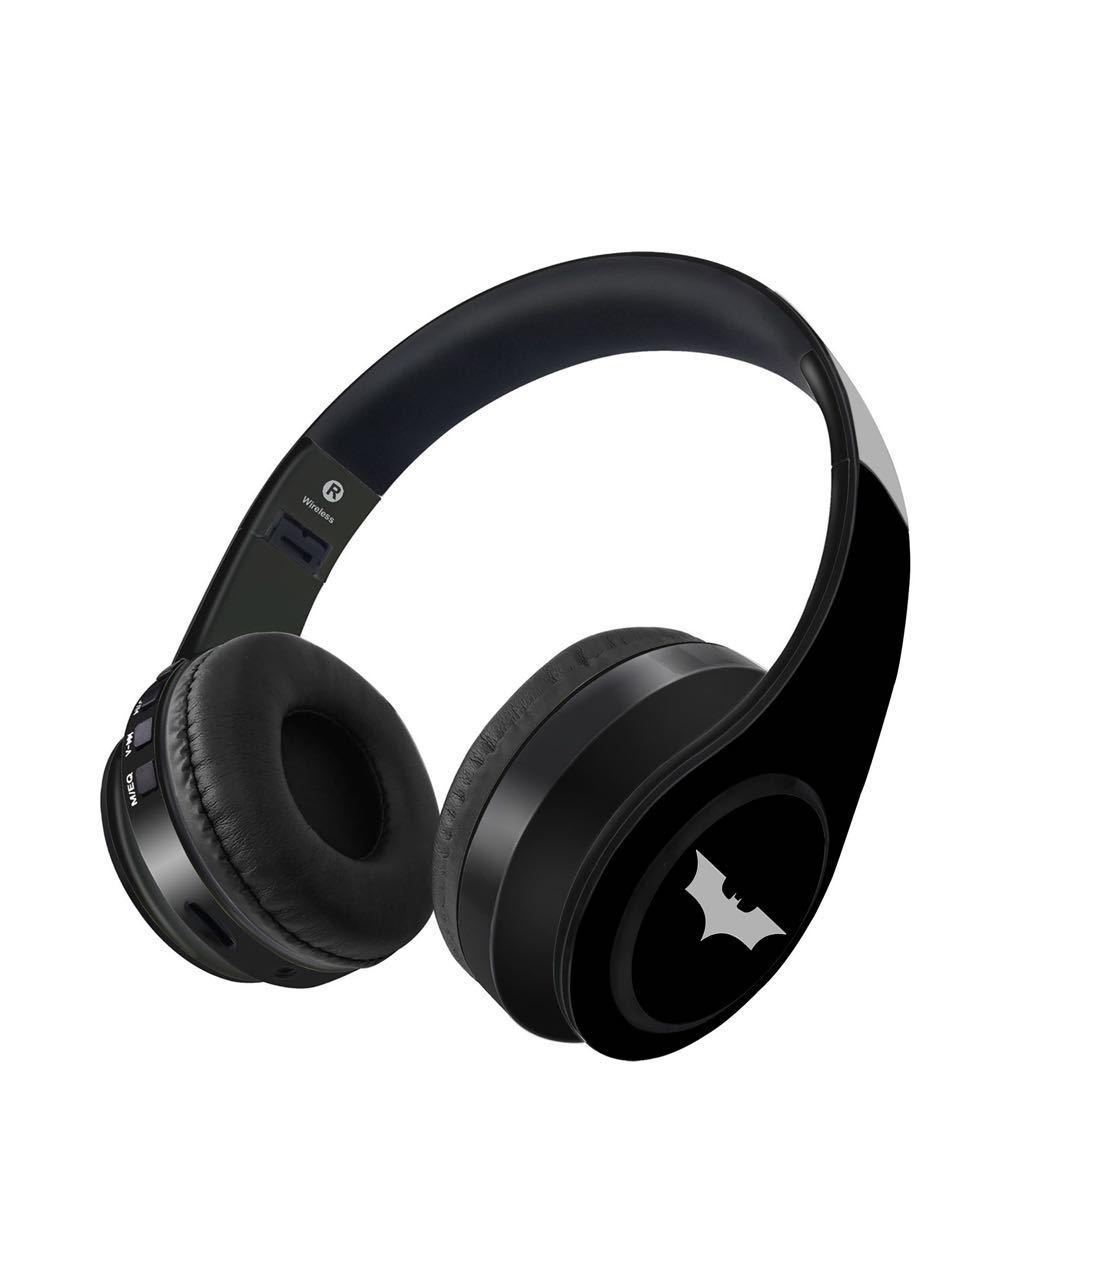 The Dark Knight - Pro Wireless On Ear Headphones